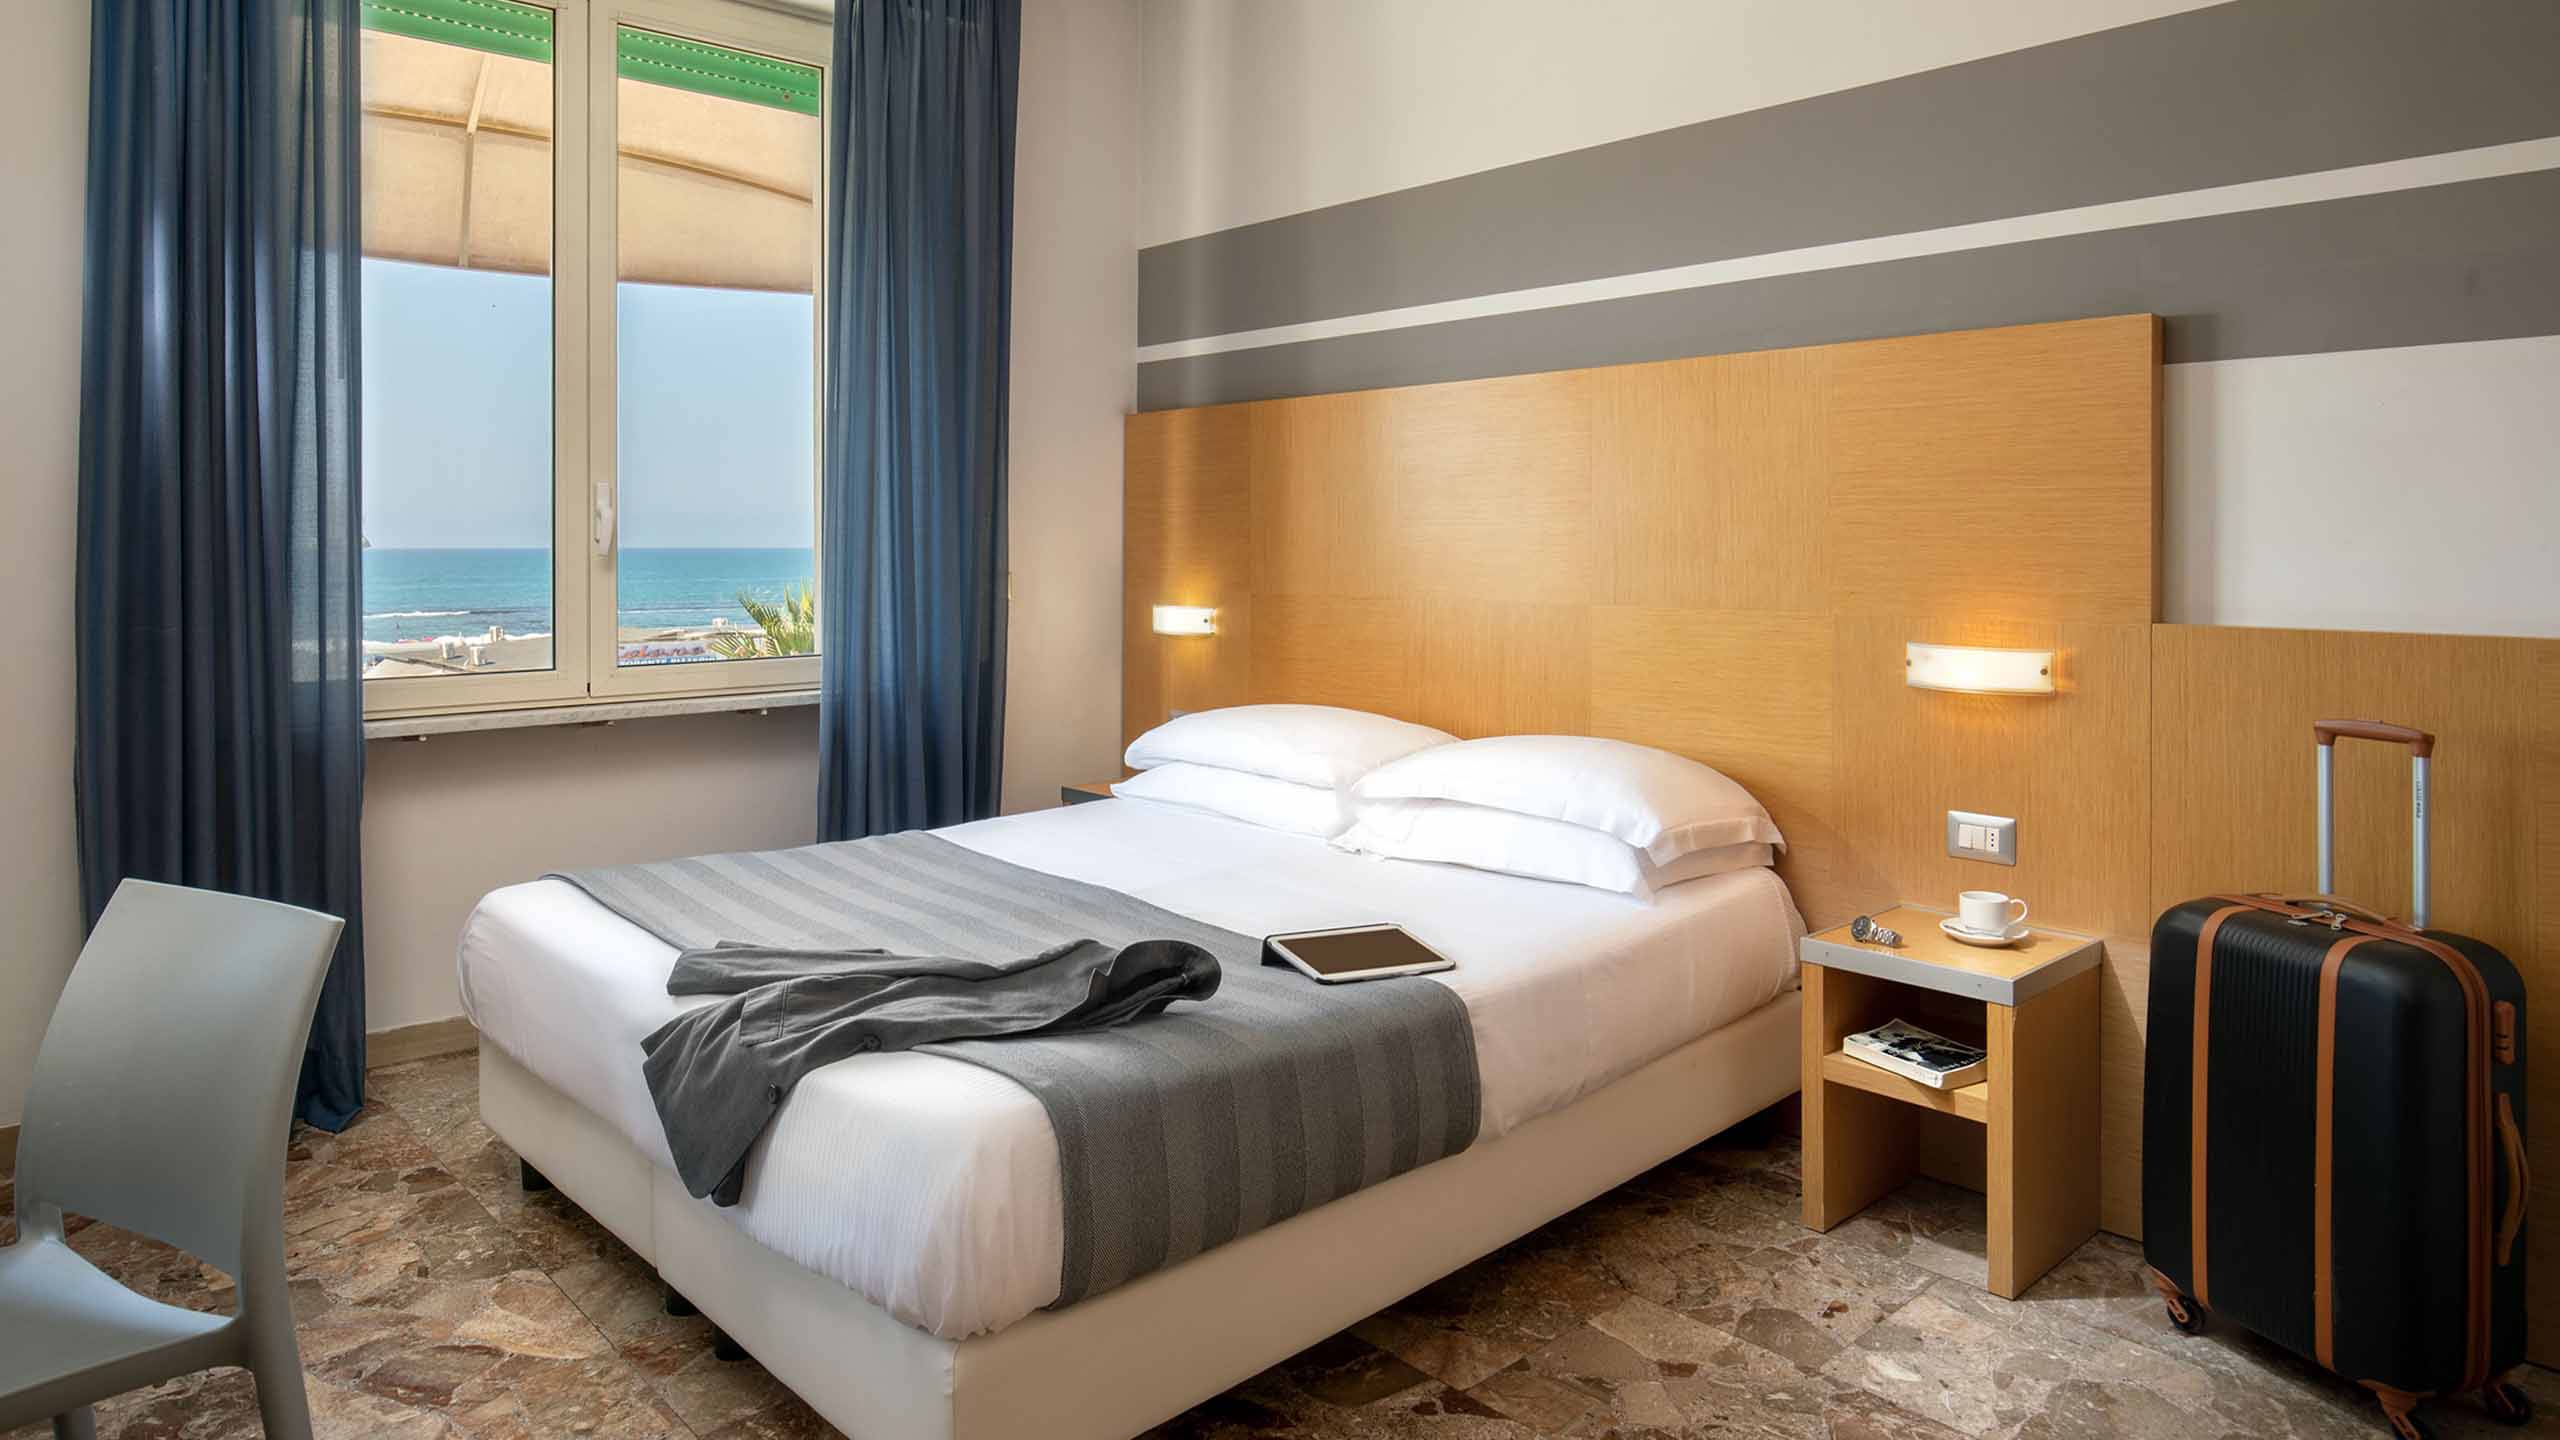 Hotel-La-Scaletta-Ostia-twin-room-with-view-5